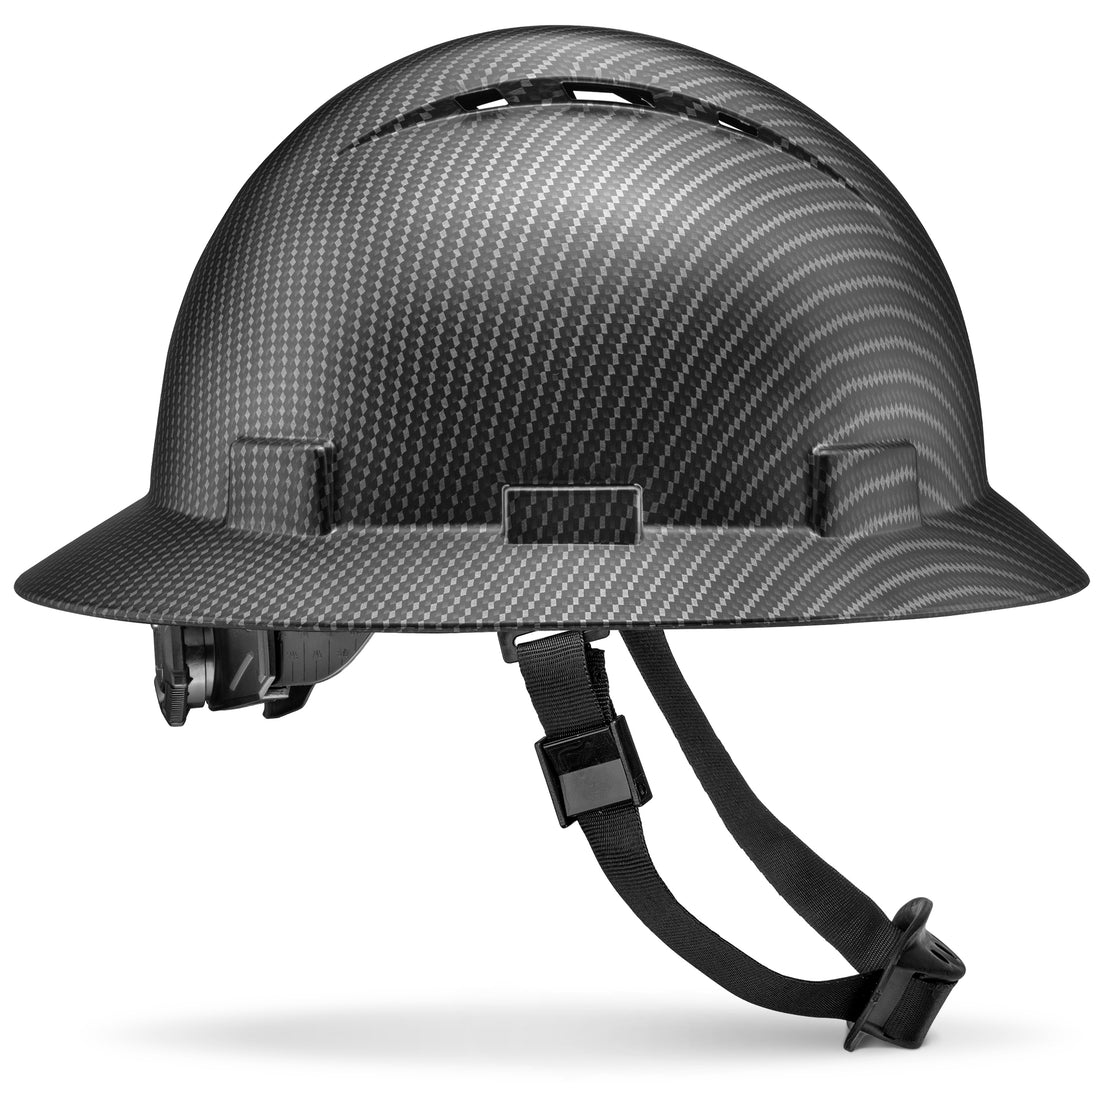 Full Brim Classic Black Carbon Fiber Carbon Fiber Design Matte Finish Vented Hard Hat